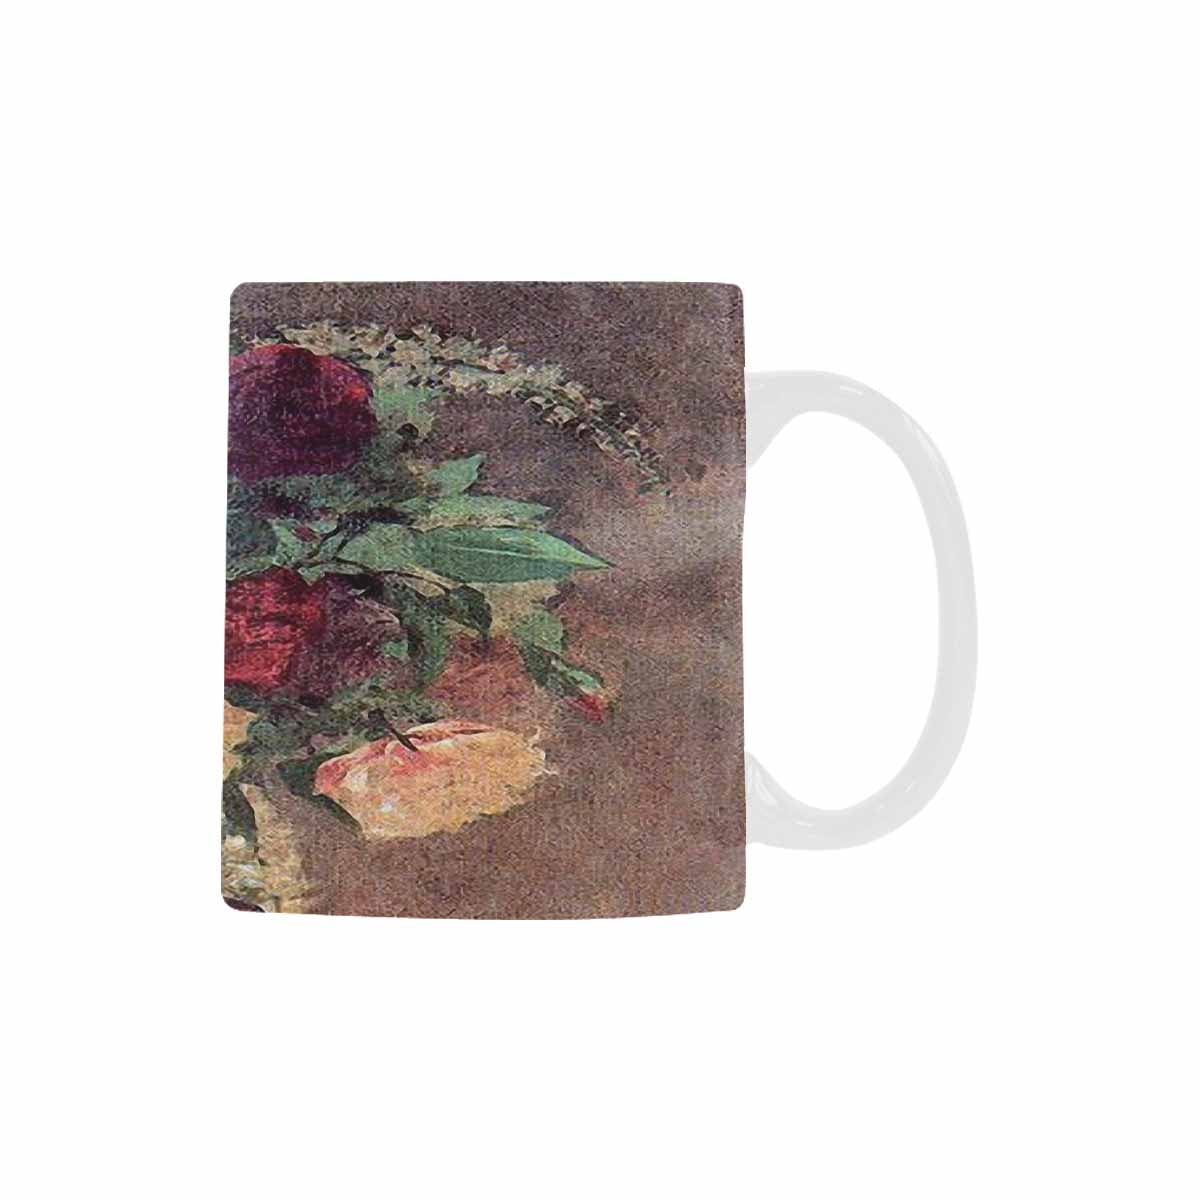 Vintage floral coffee mug or tea cup, Design 29